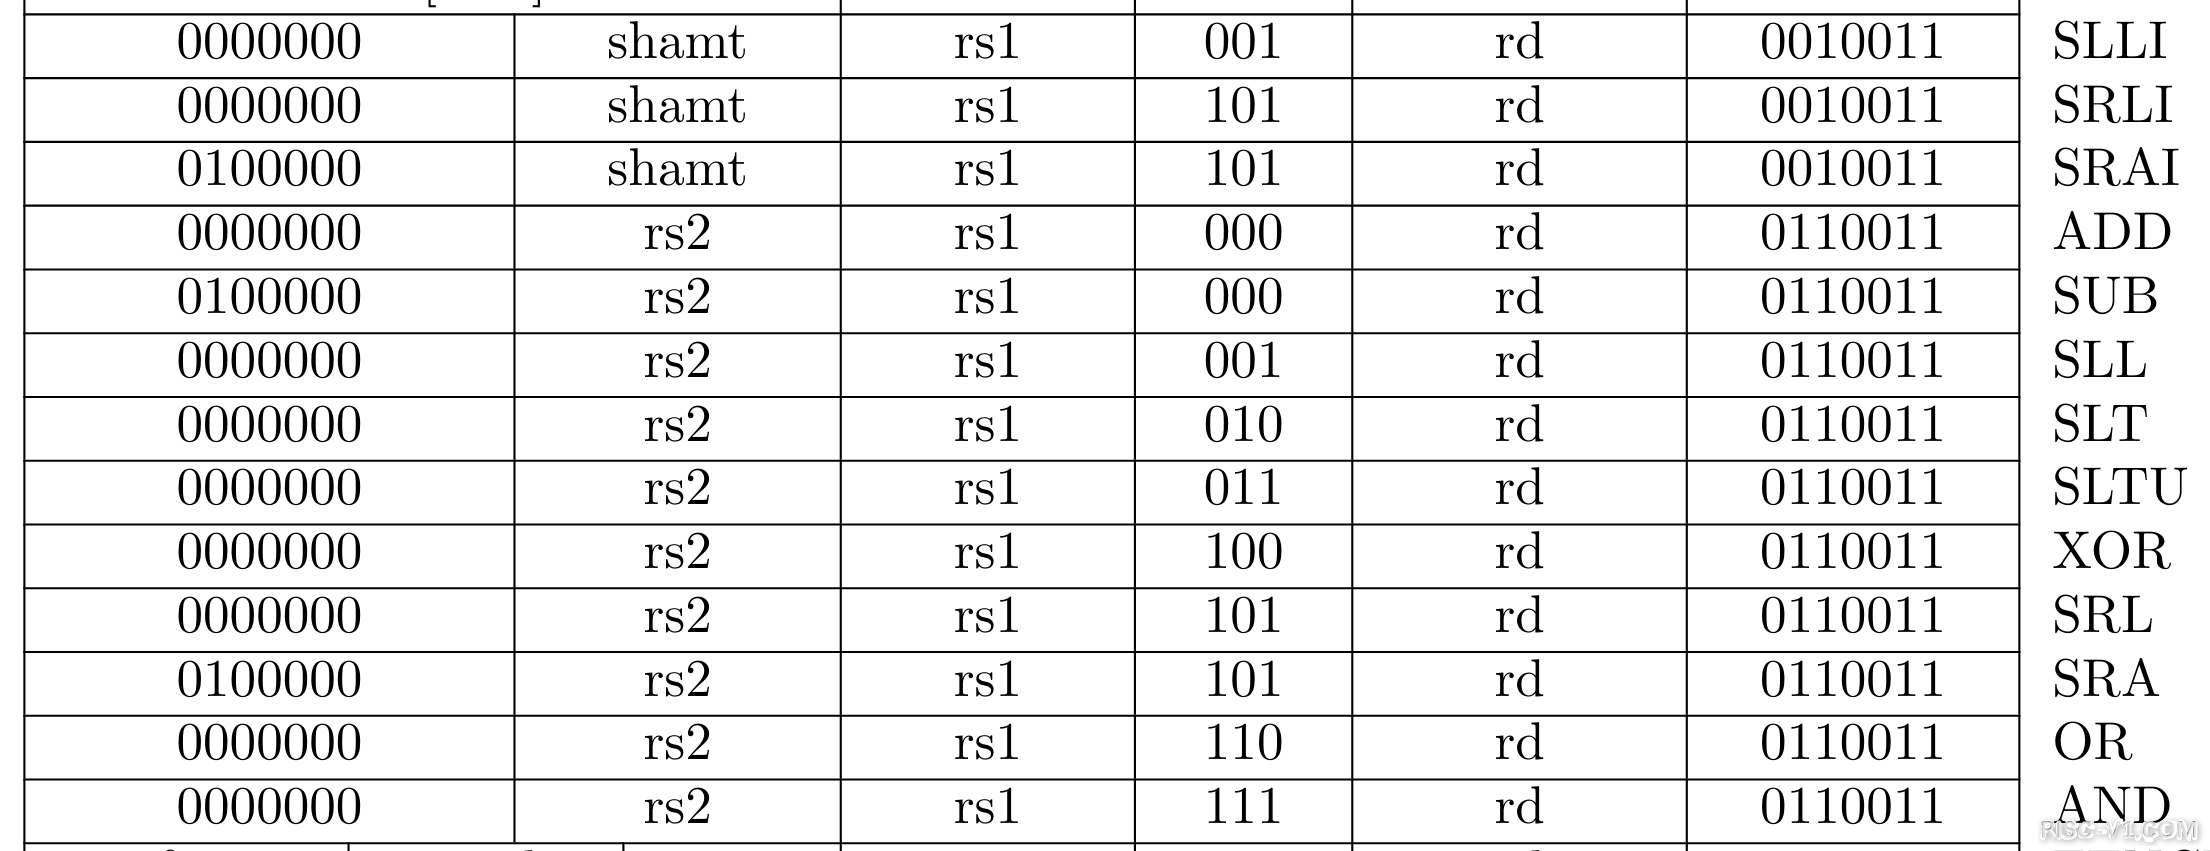 GD32VF 单片机芯片及应用-嵌入式IoT[03]_riscv实现自定义指令并用qemu运行risc-v单片机中文社区(2)